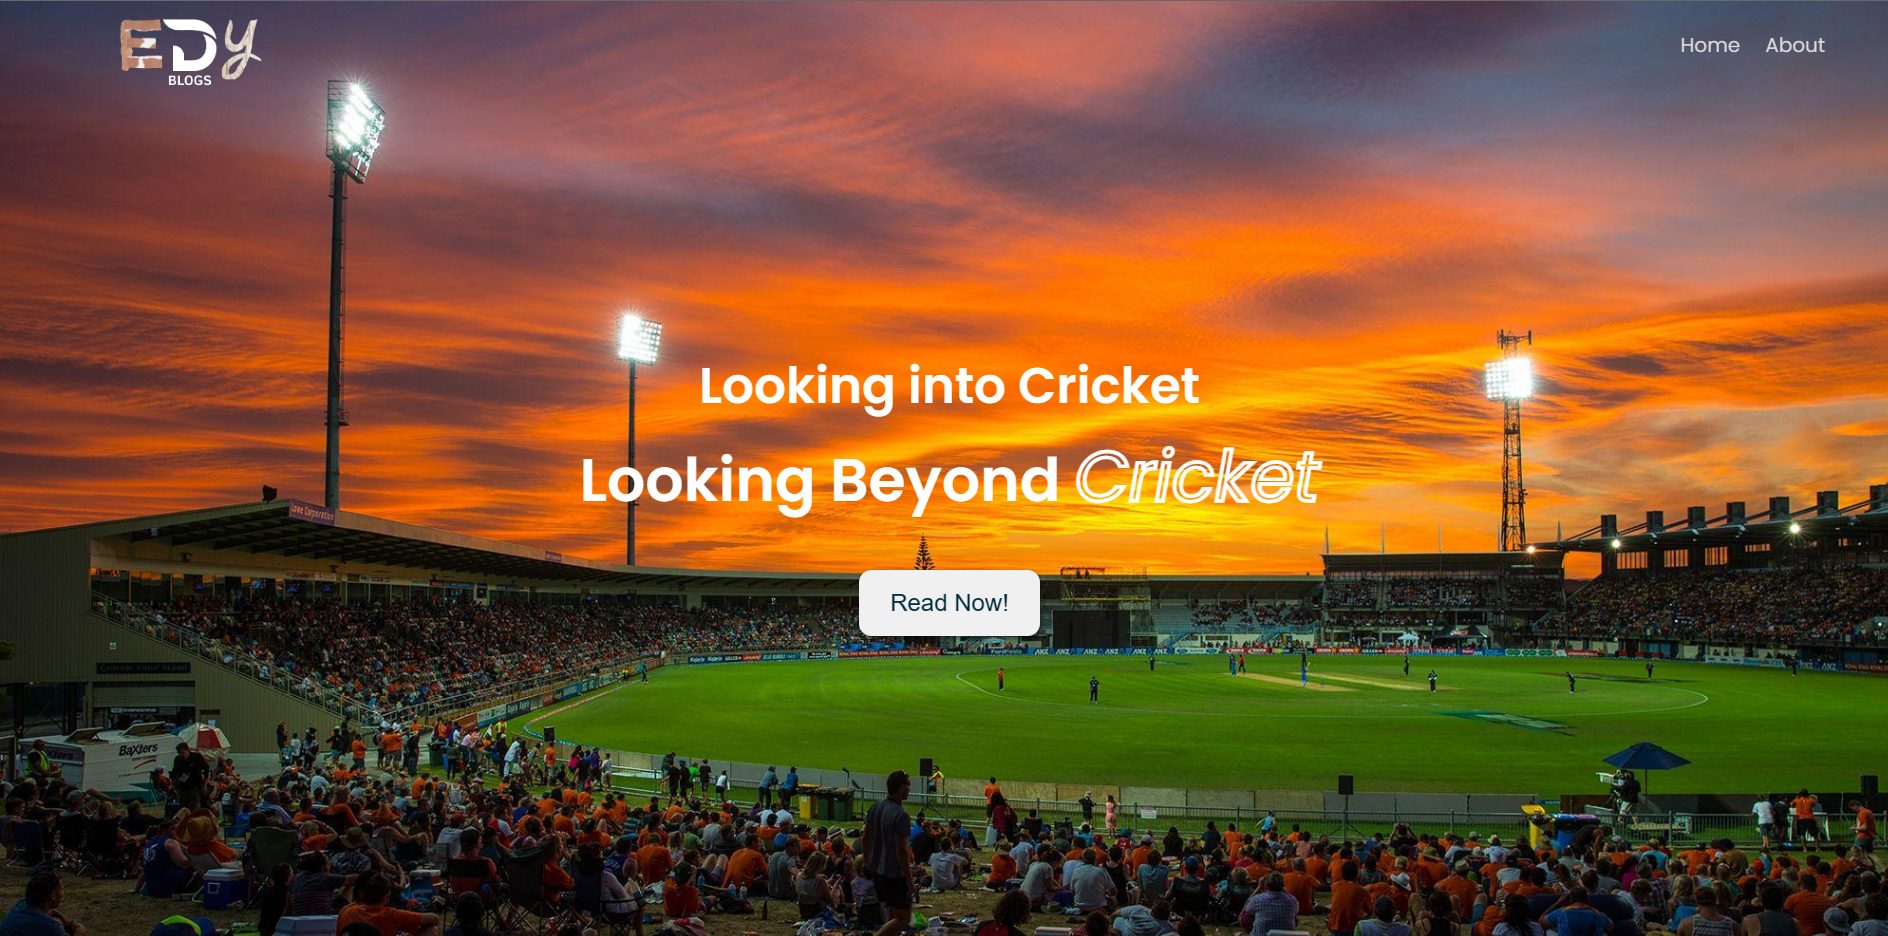 EDY Cricket Blog